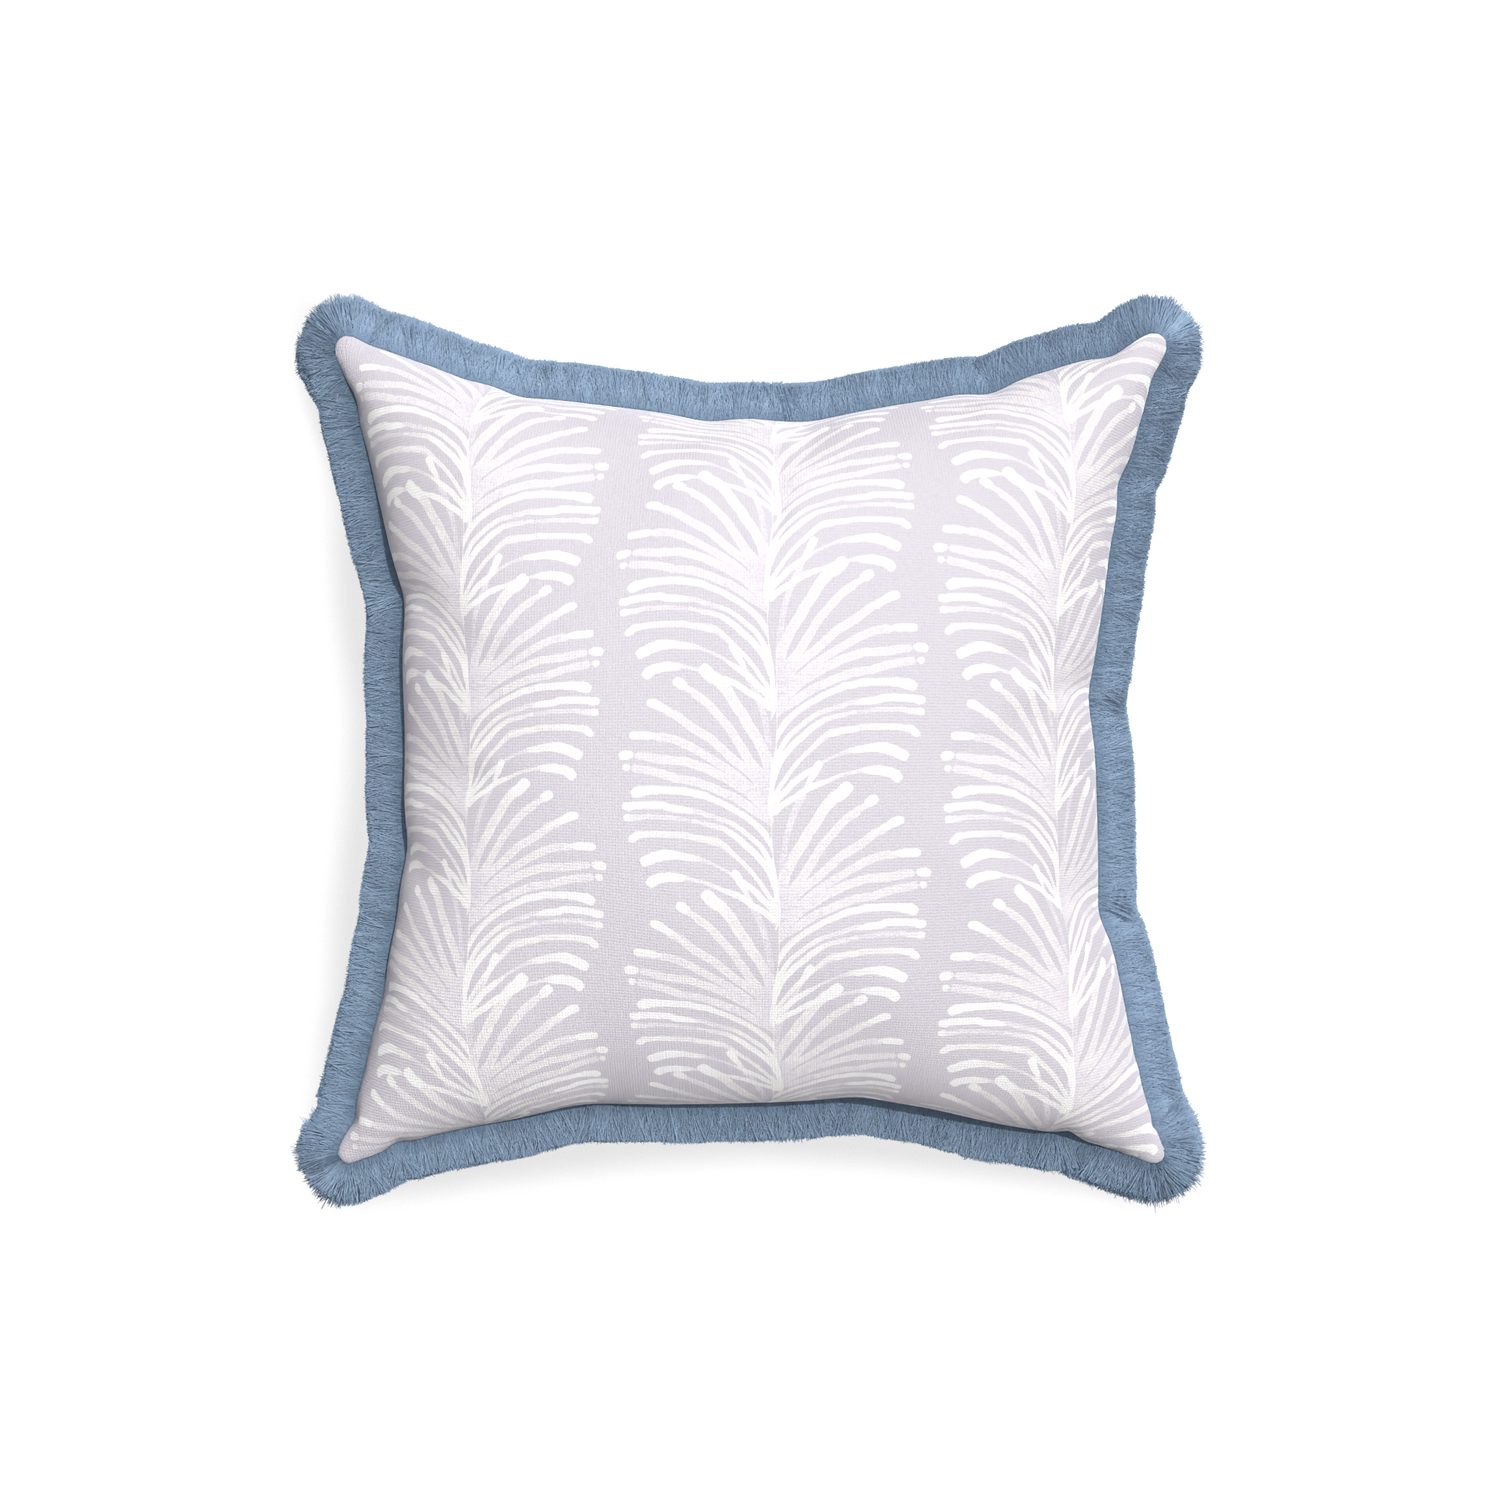 18-square emma lavender custom pillow with sky fringe on white background